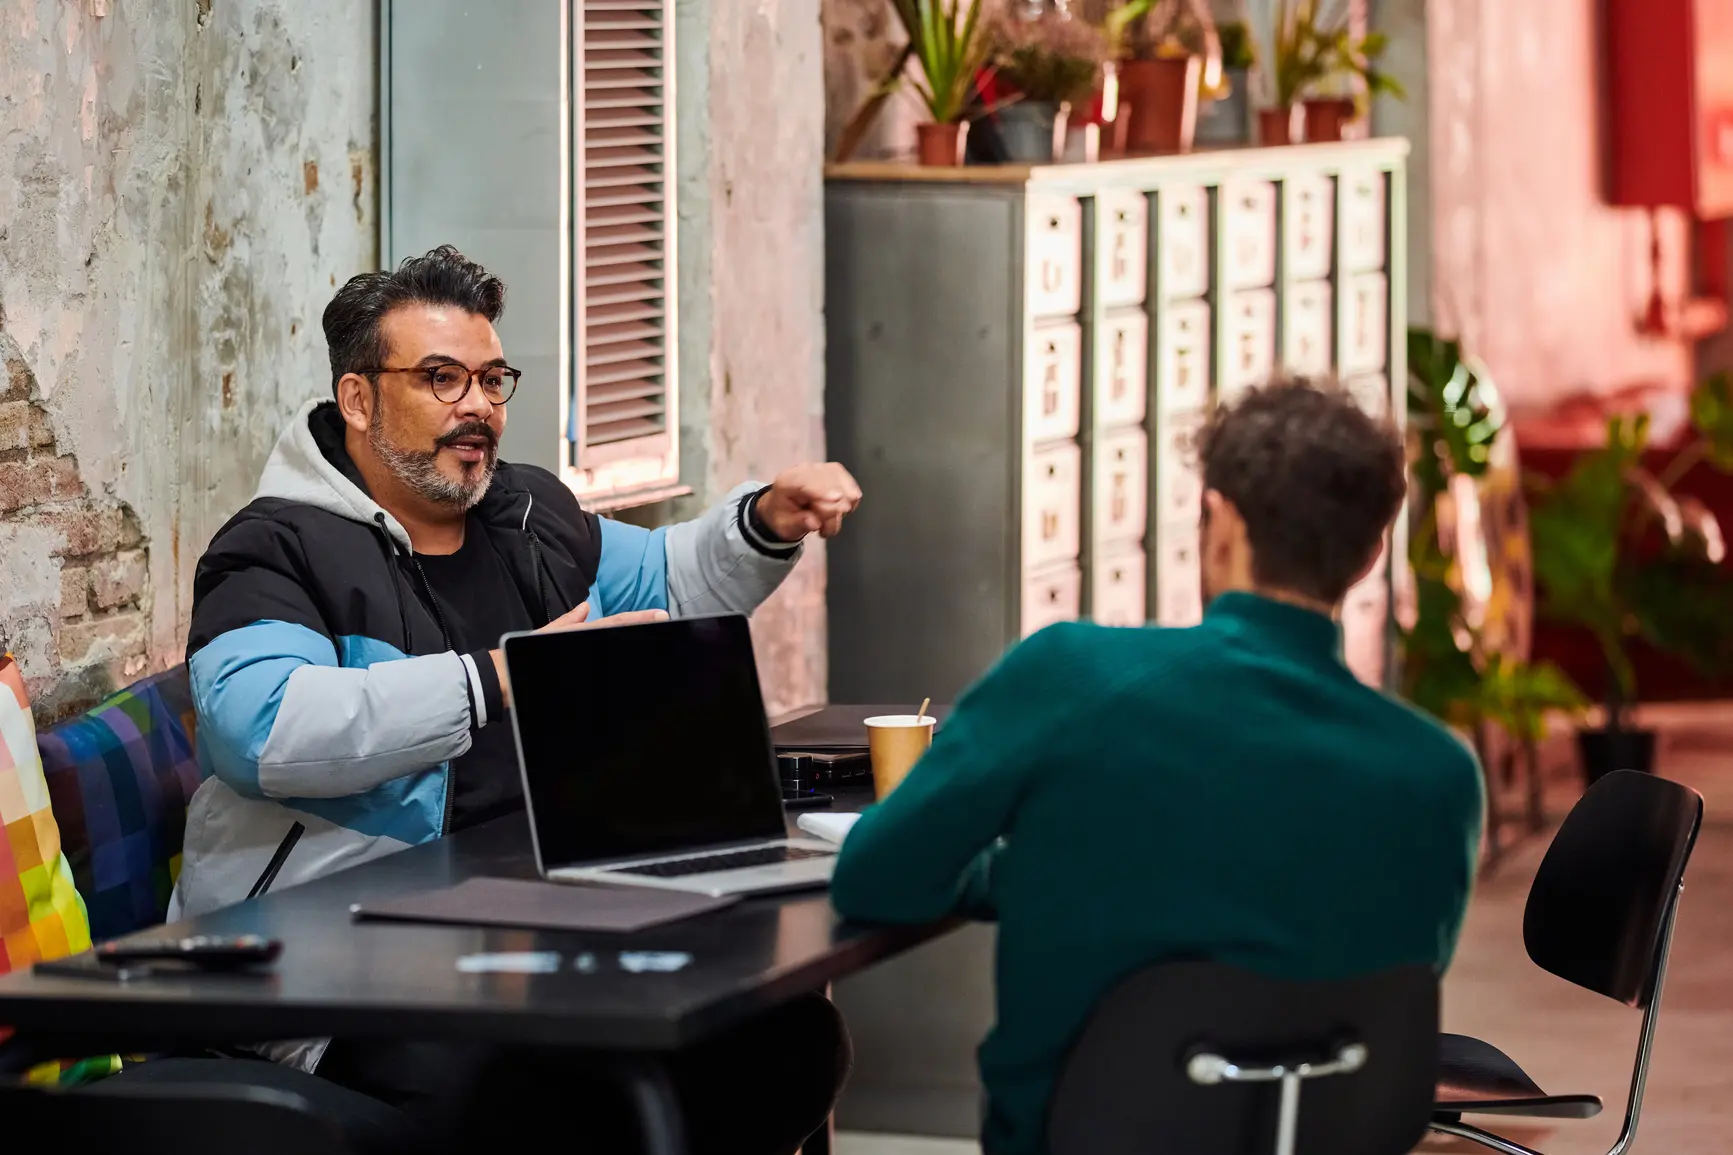 Two men talk gesticulating in a modern loft office.